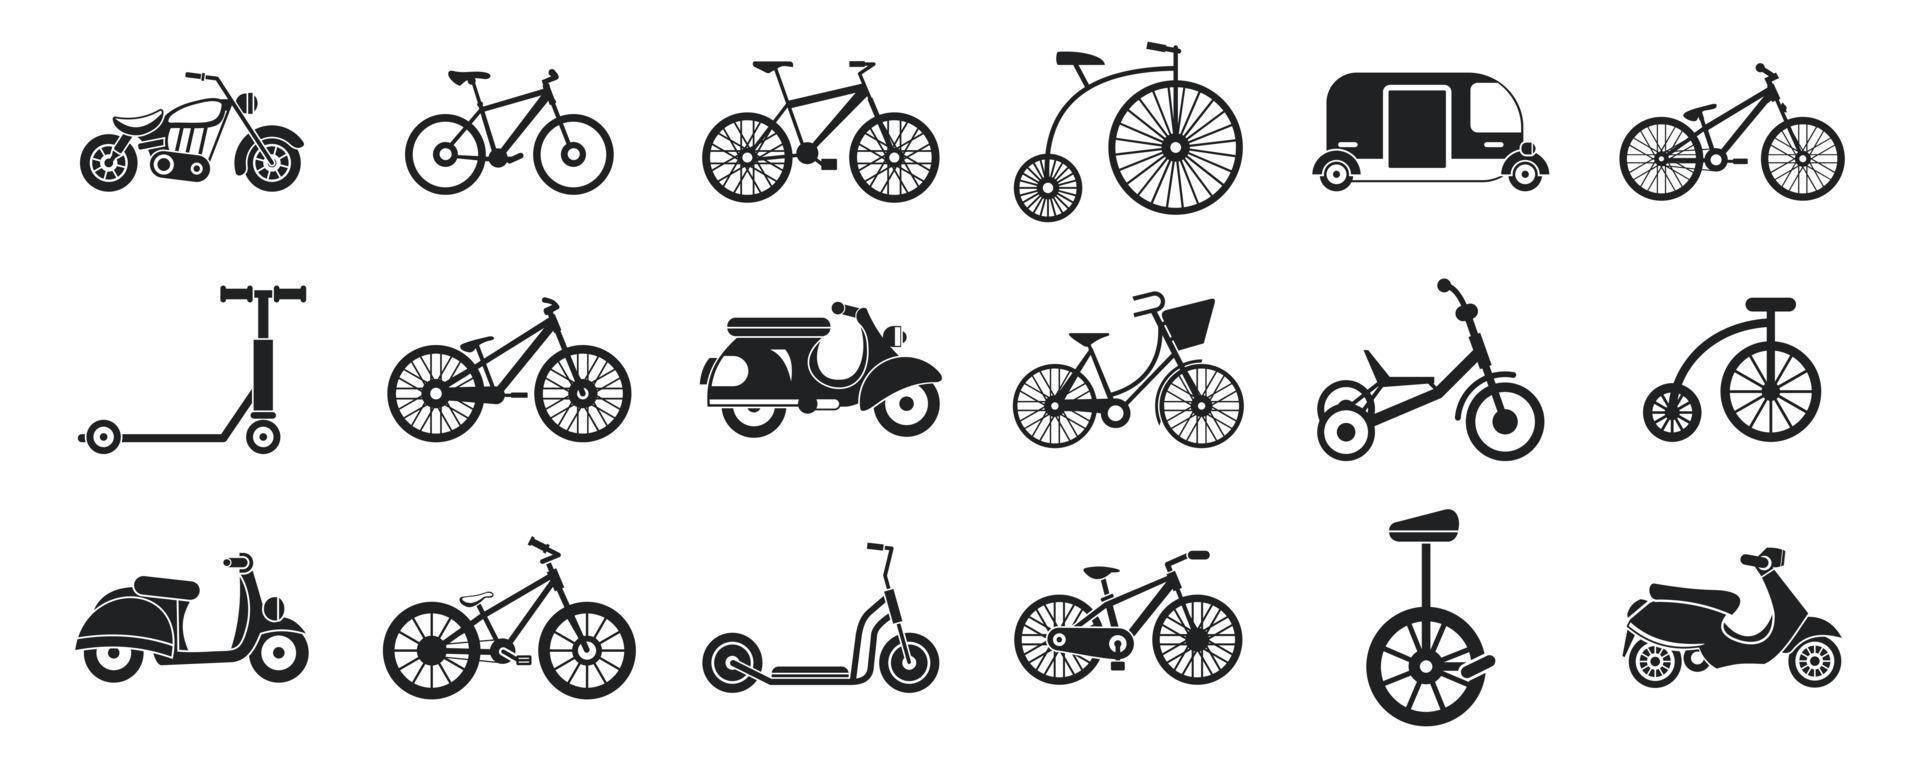 Bike icon set, simple style vector